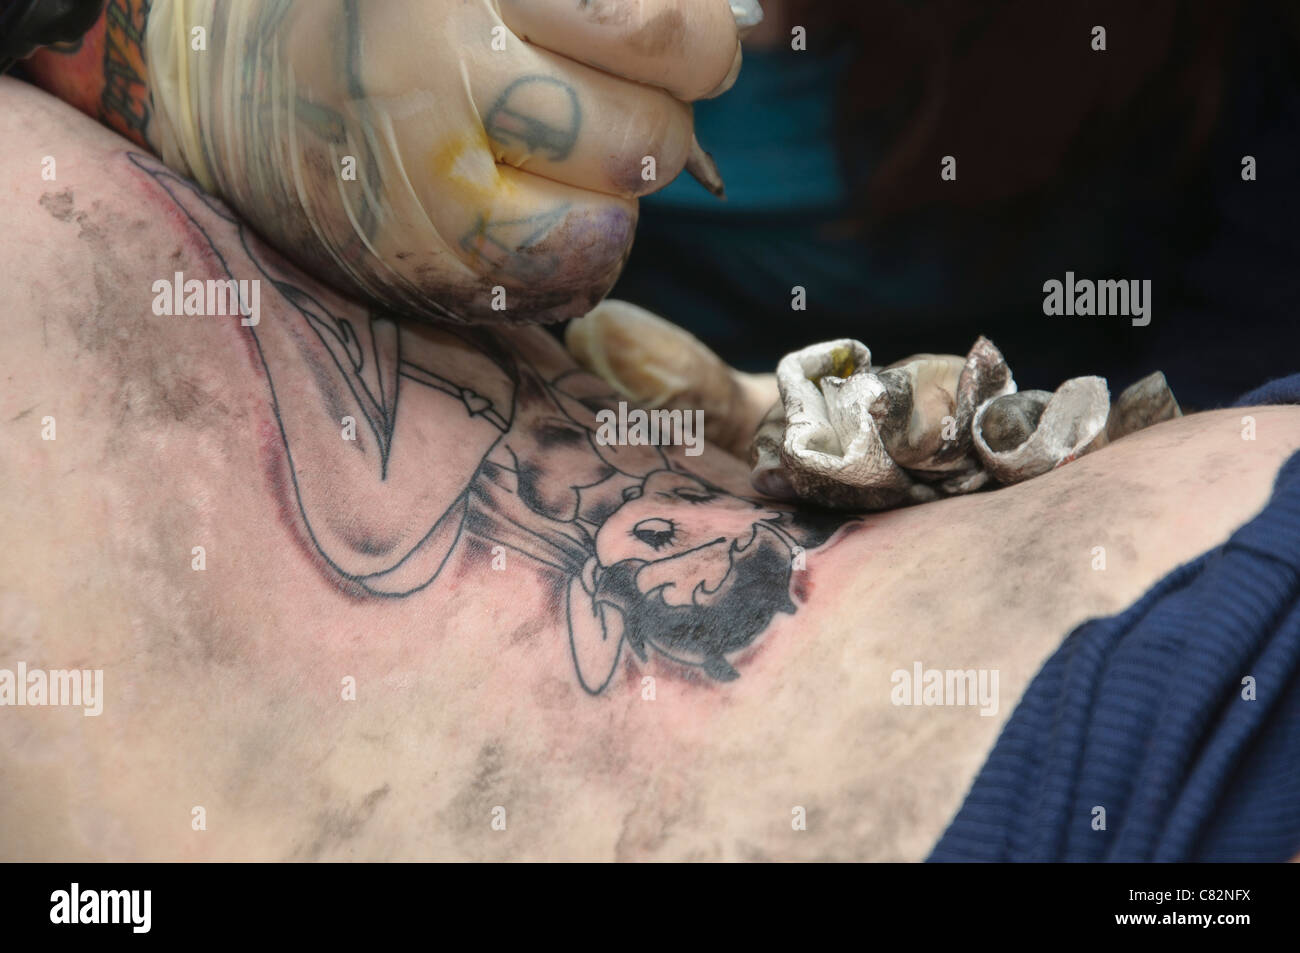 Betty Boop Tattoo by slayingallhumans on DeviantArt